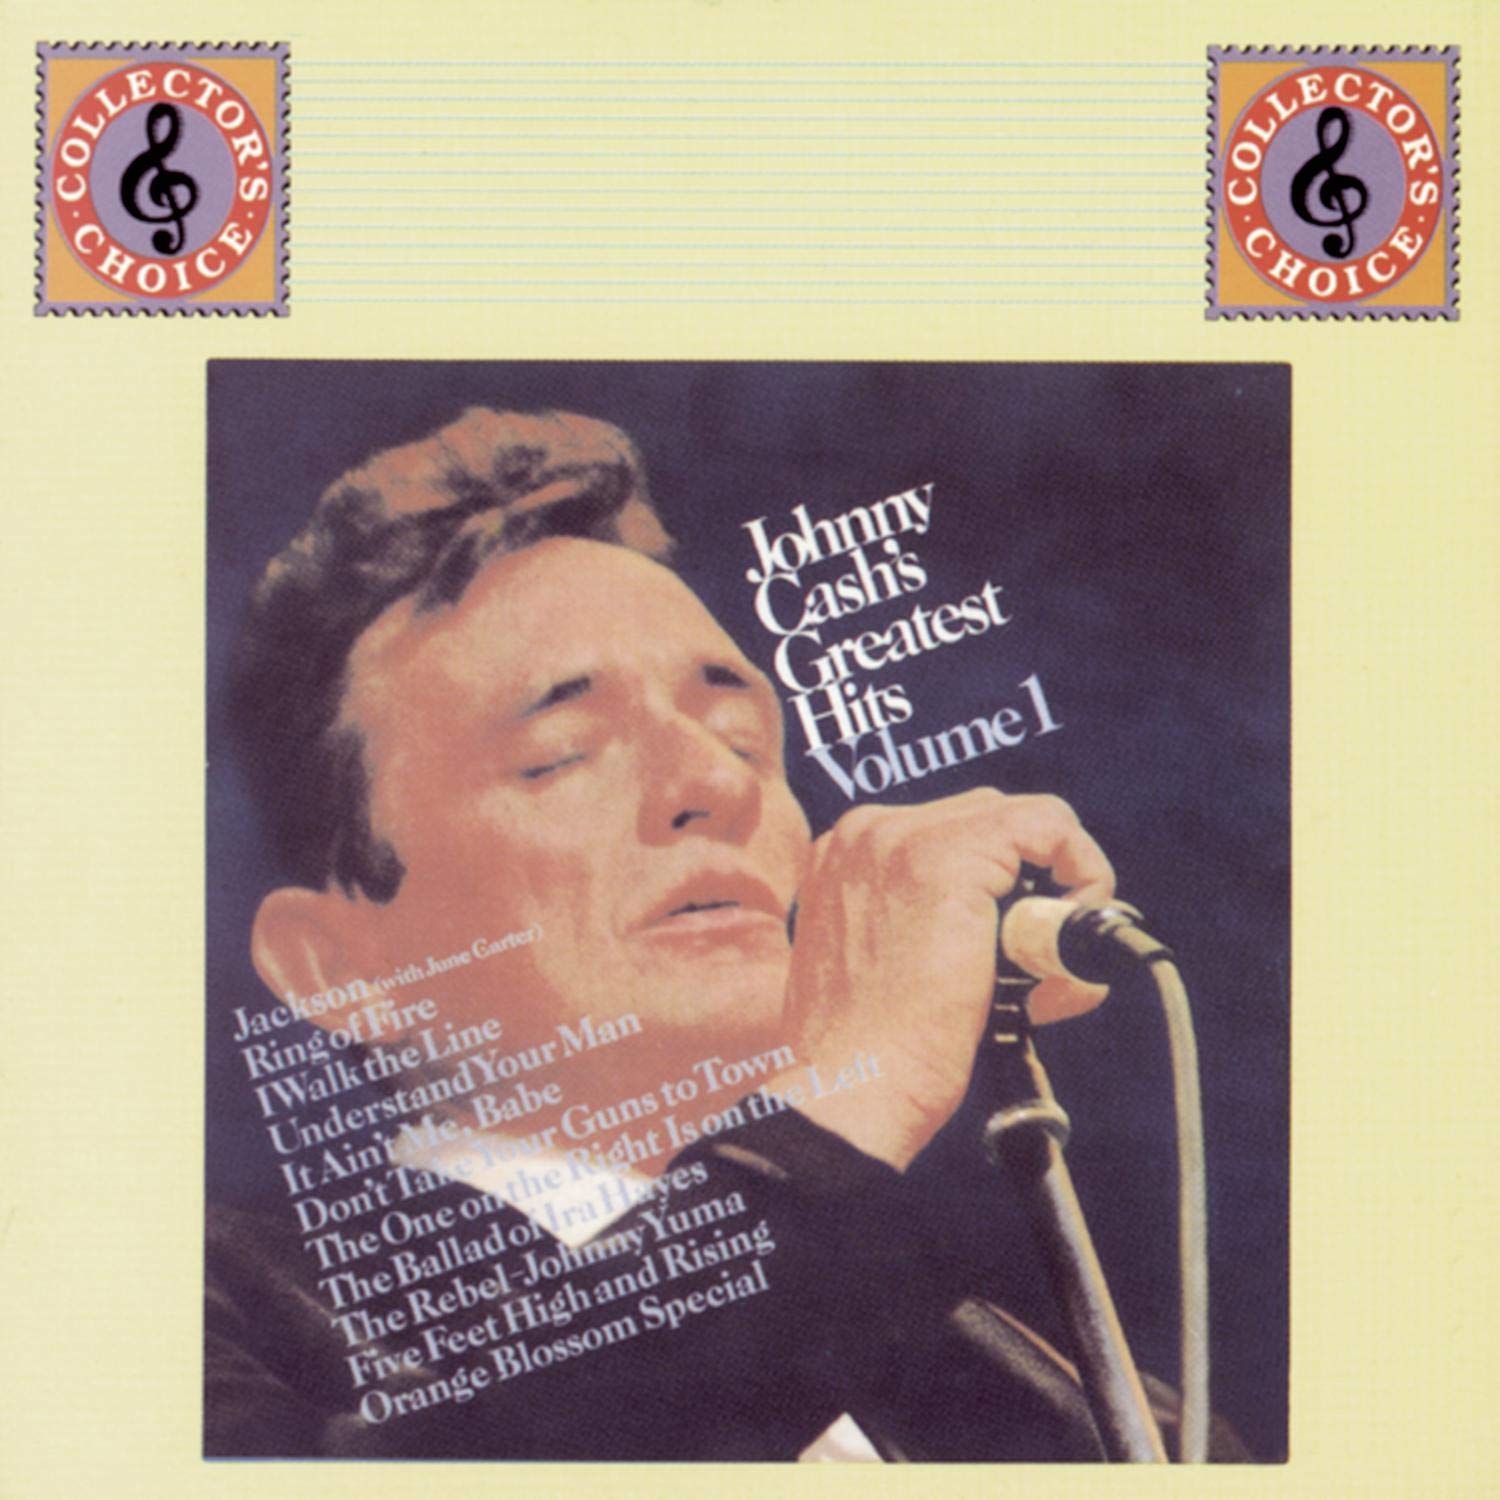 Johnny Cash - Greatest Hits, Vol. 1